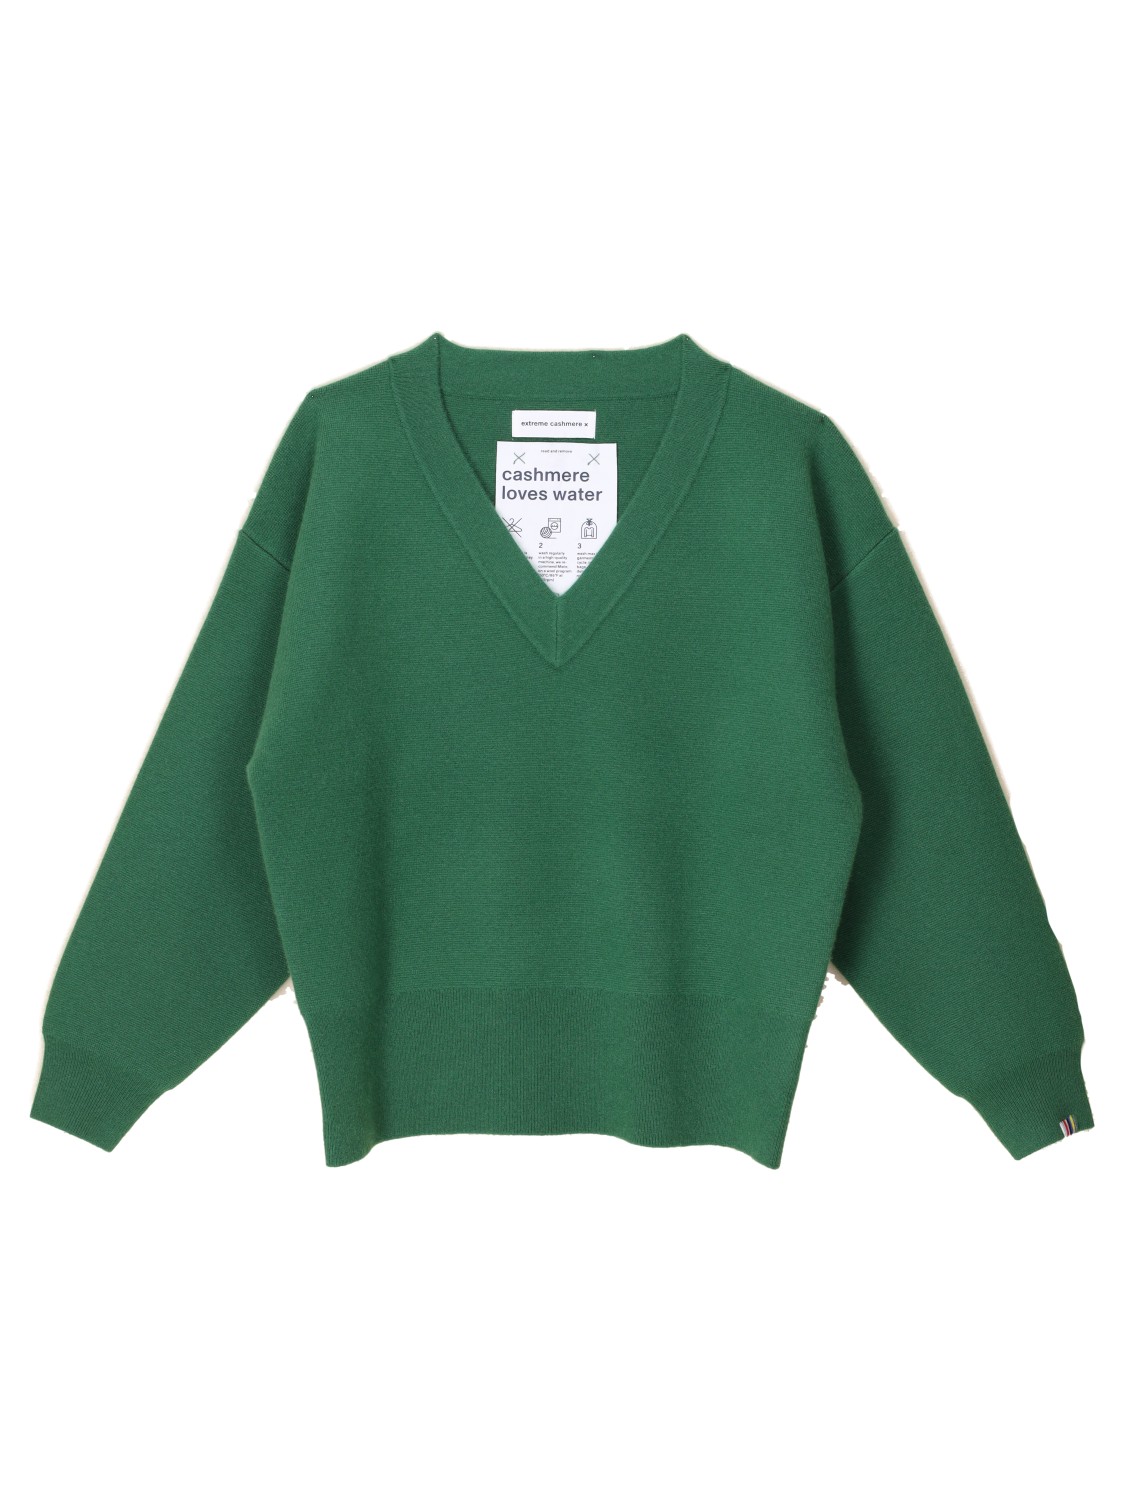 N° 316 Lana - V-neck cashmere sweater 